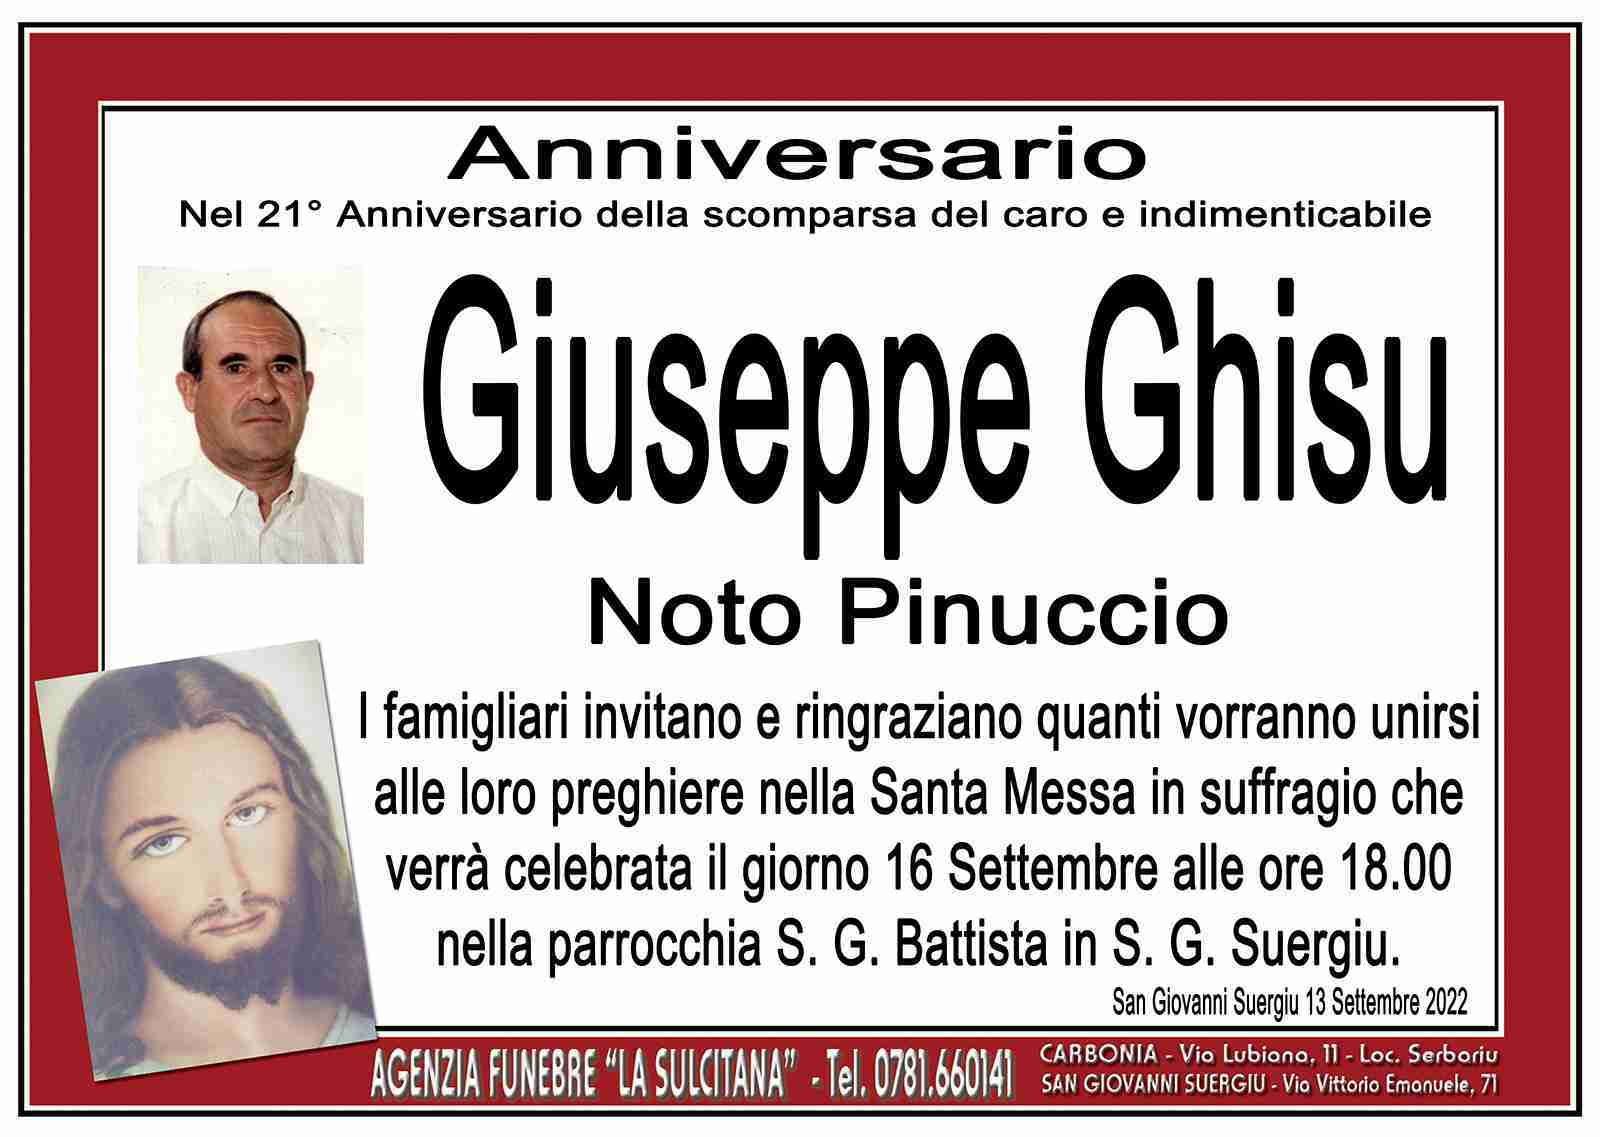 Giuseppe Ghisu